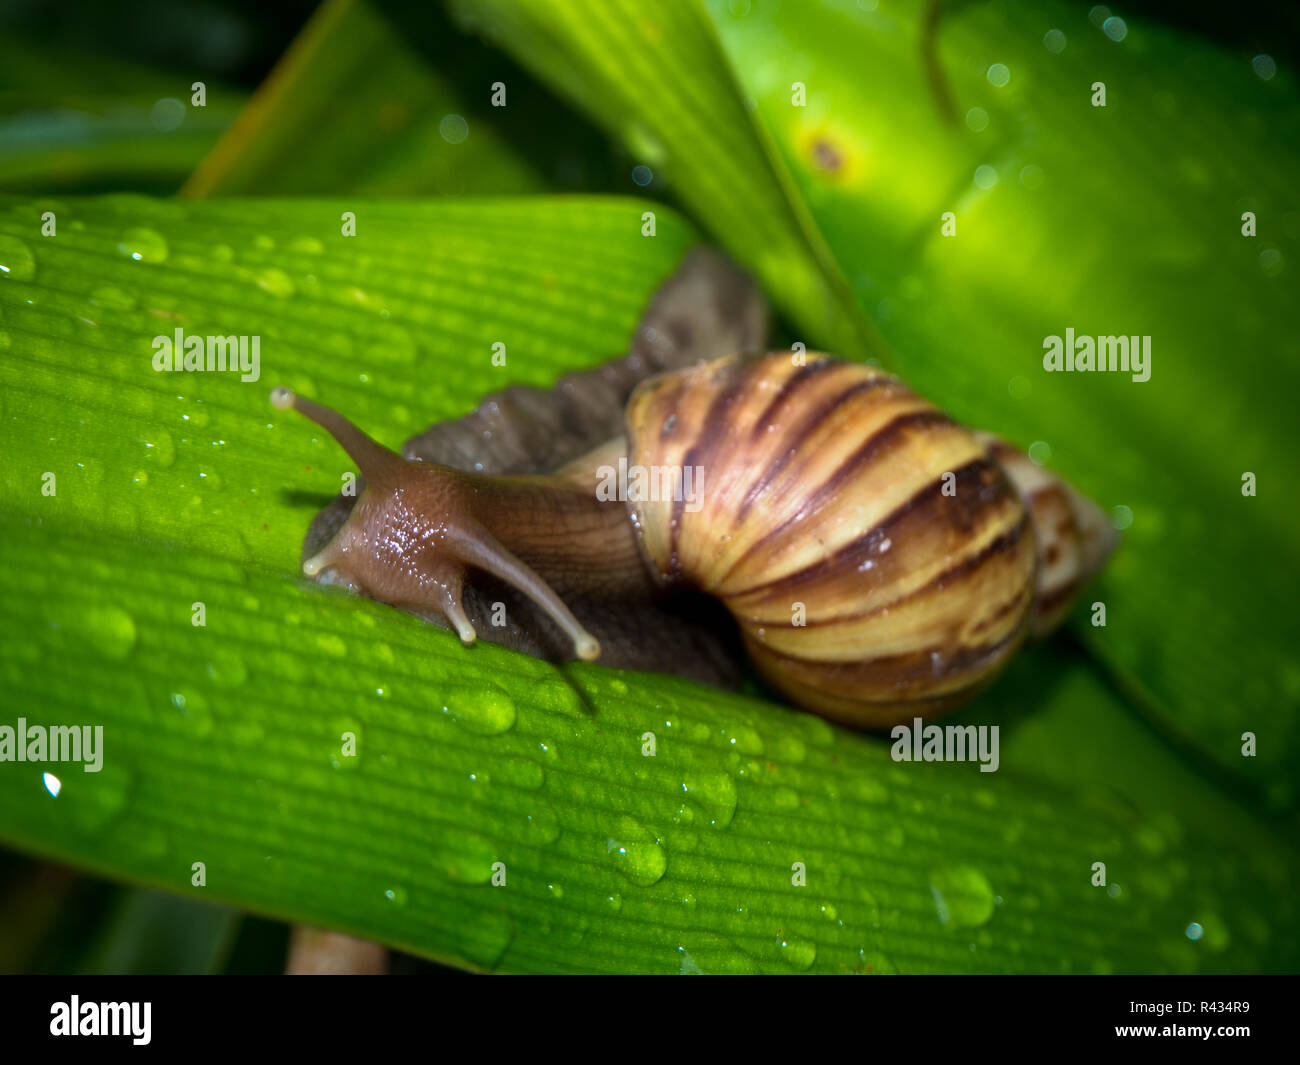 Snail on leaf Stock Photo